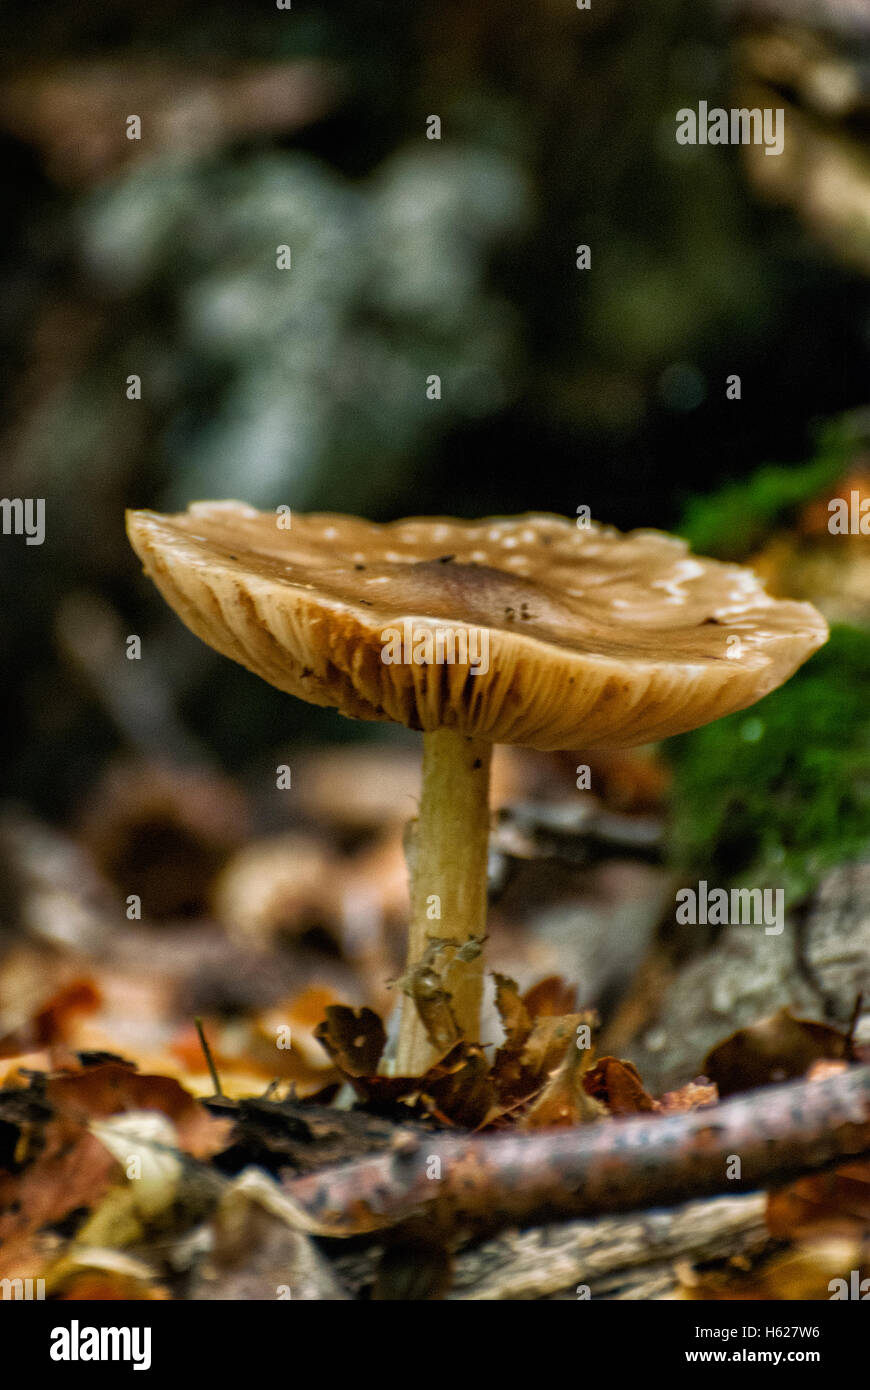 Fresh mushroom growing on the forest floor Stock Photo